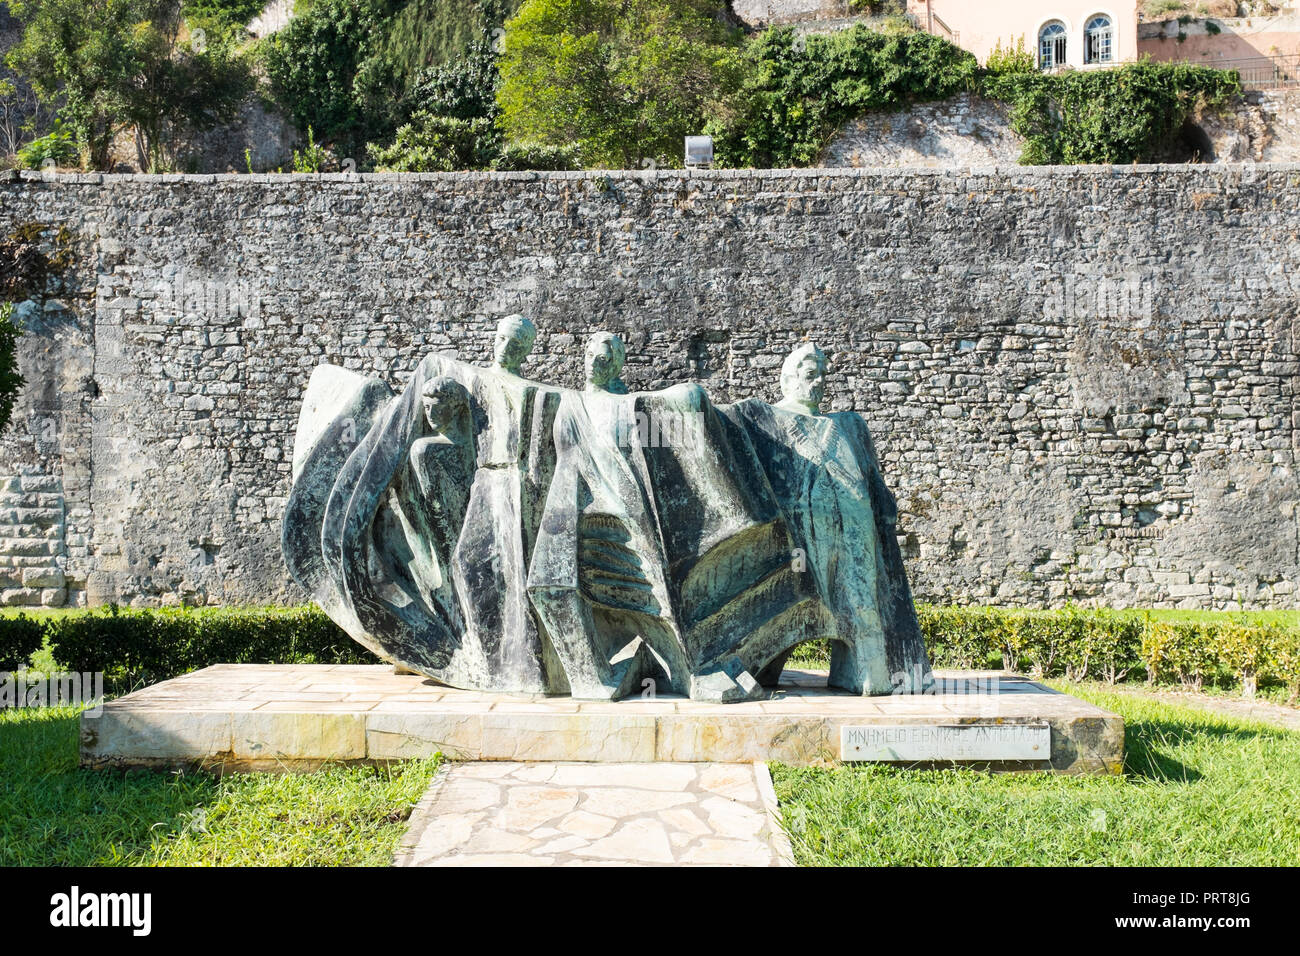 Large copper sculpture World War 2 memorial in Corfu Town, Corfu, Greece Stock Photo